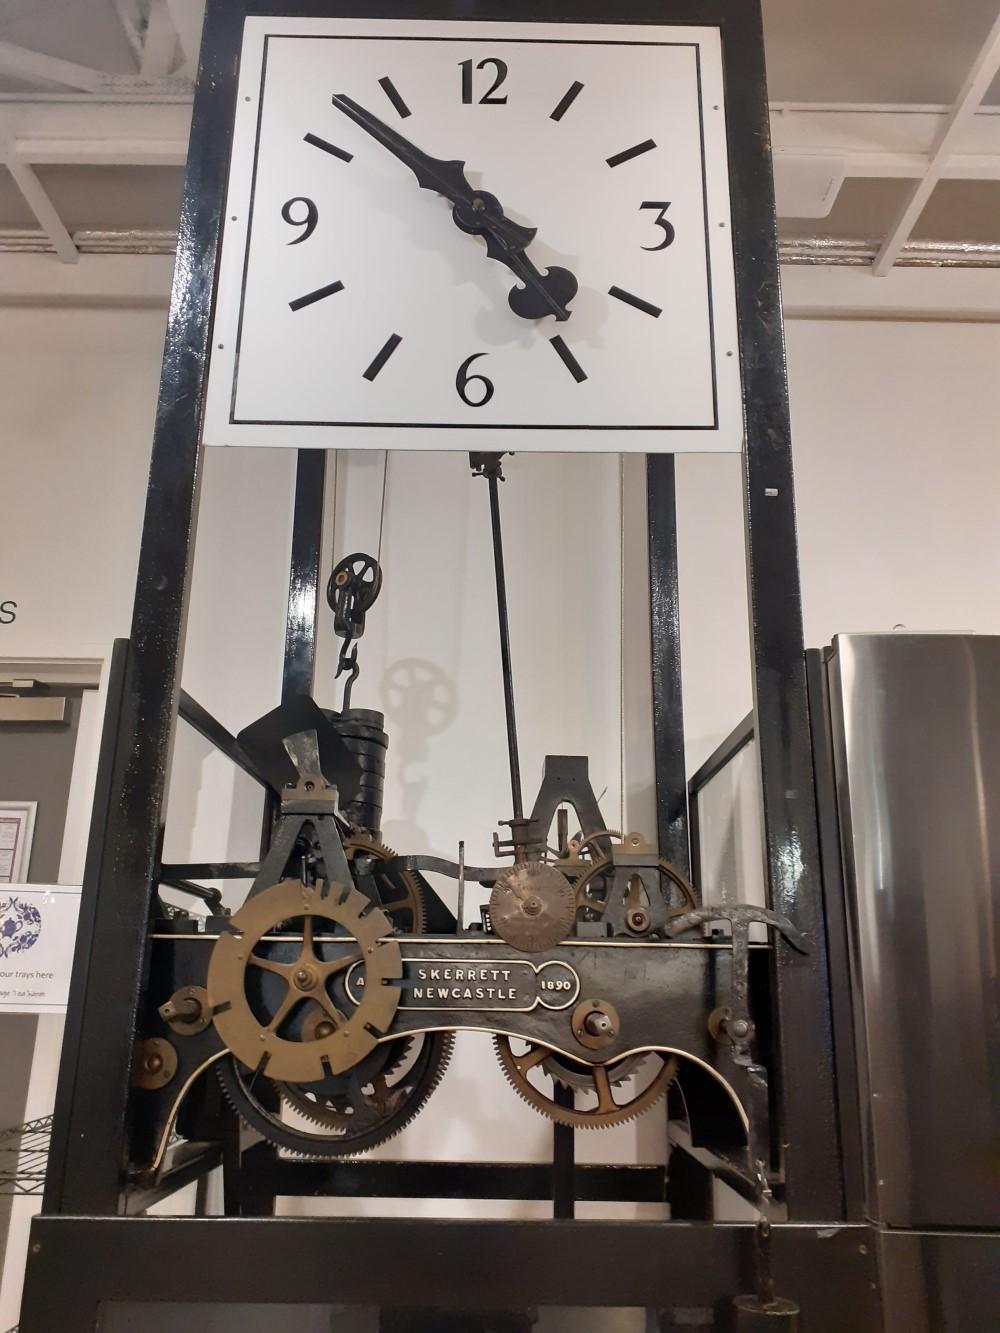 Muncipal hall clock at brampton